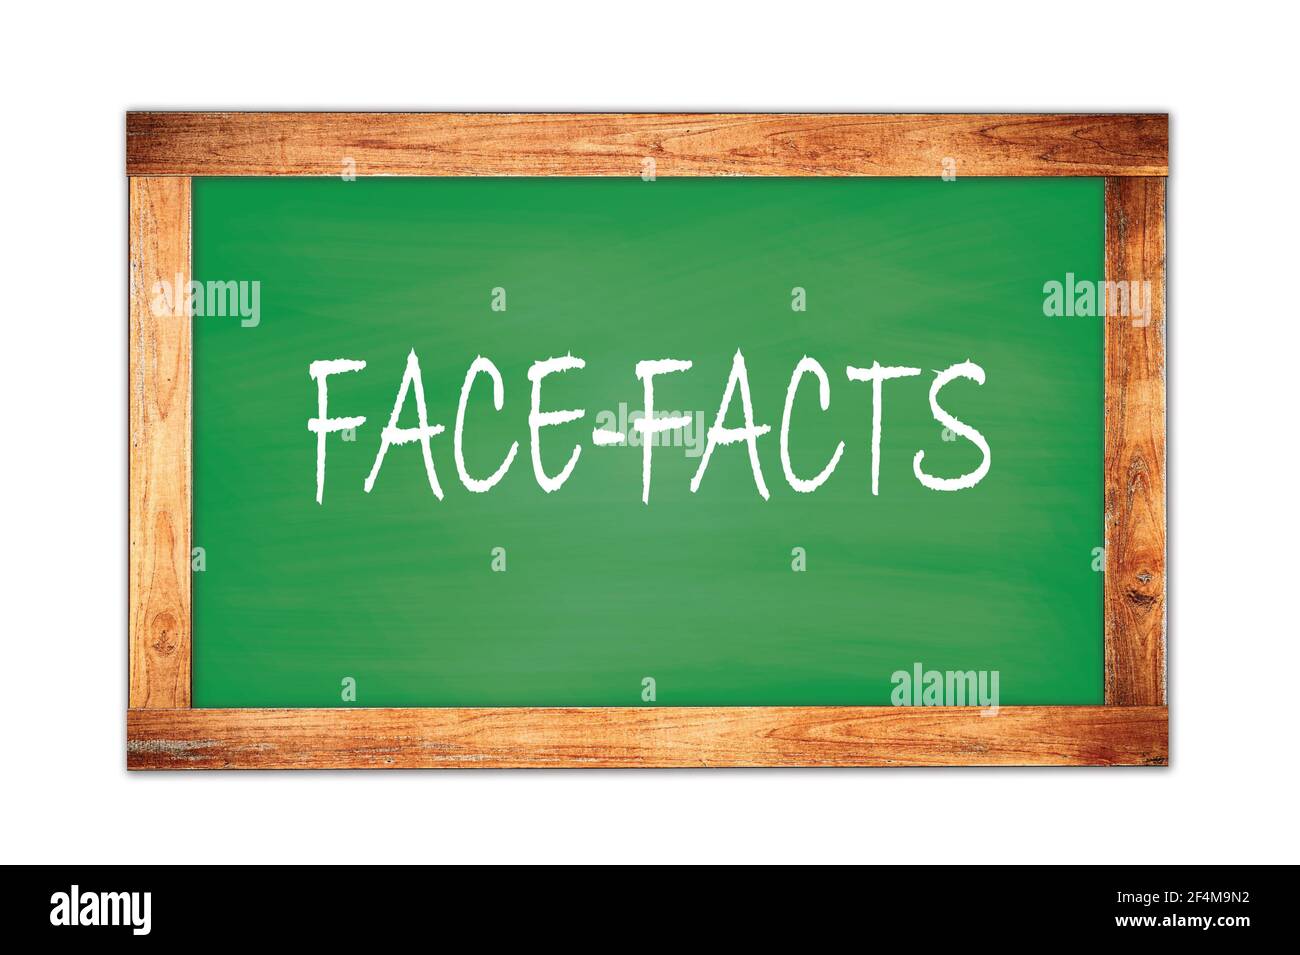 FACE-FACTS text written on green wooden frame school blackboard. Stock Photo